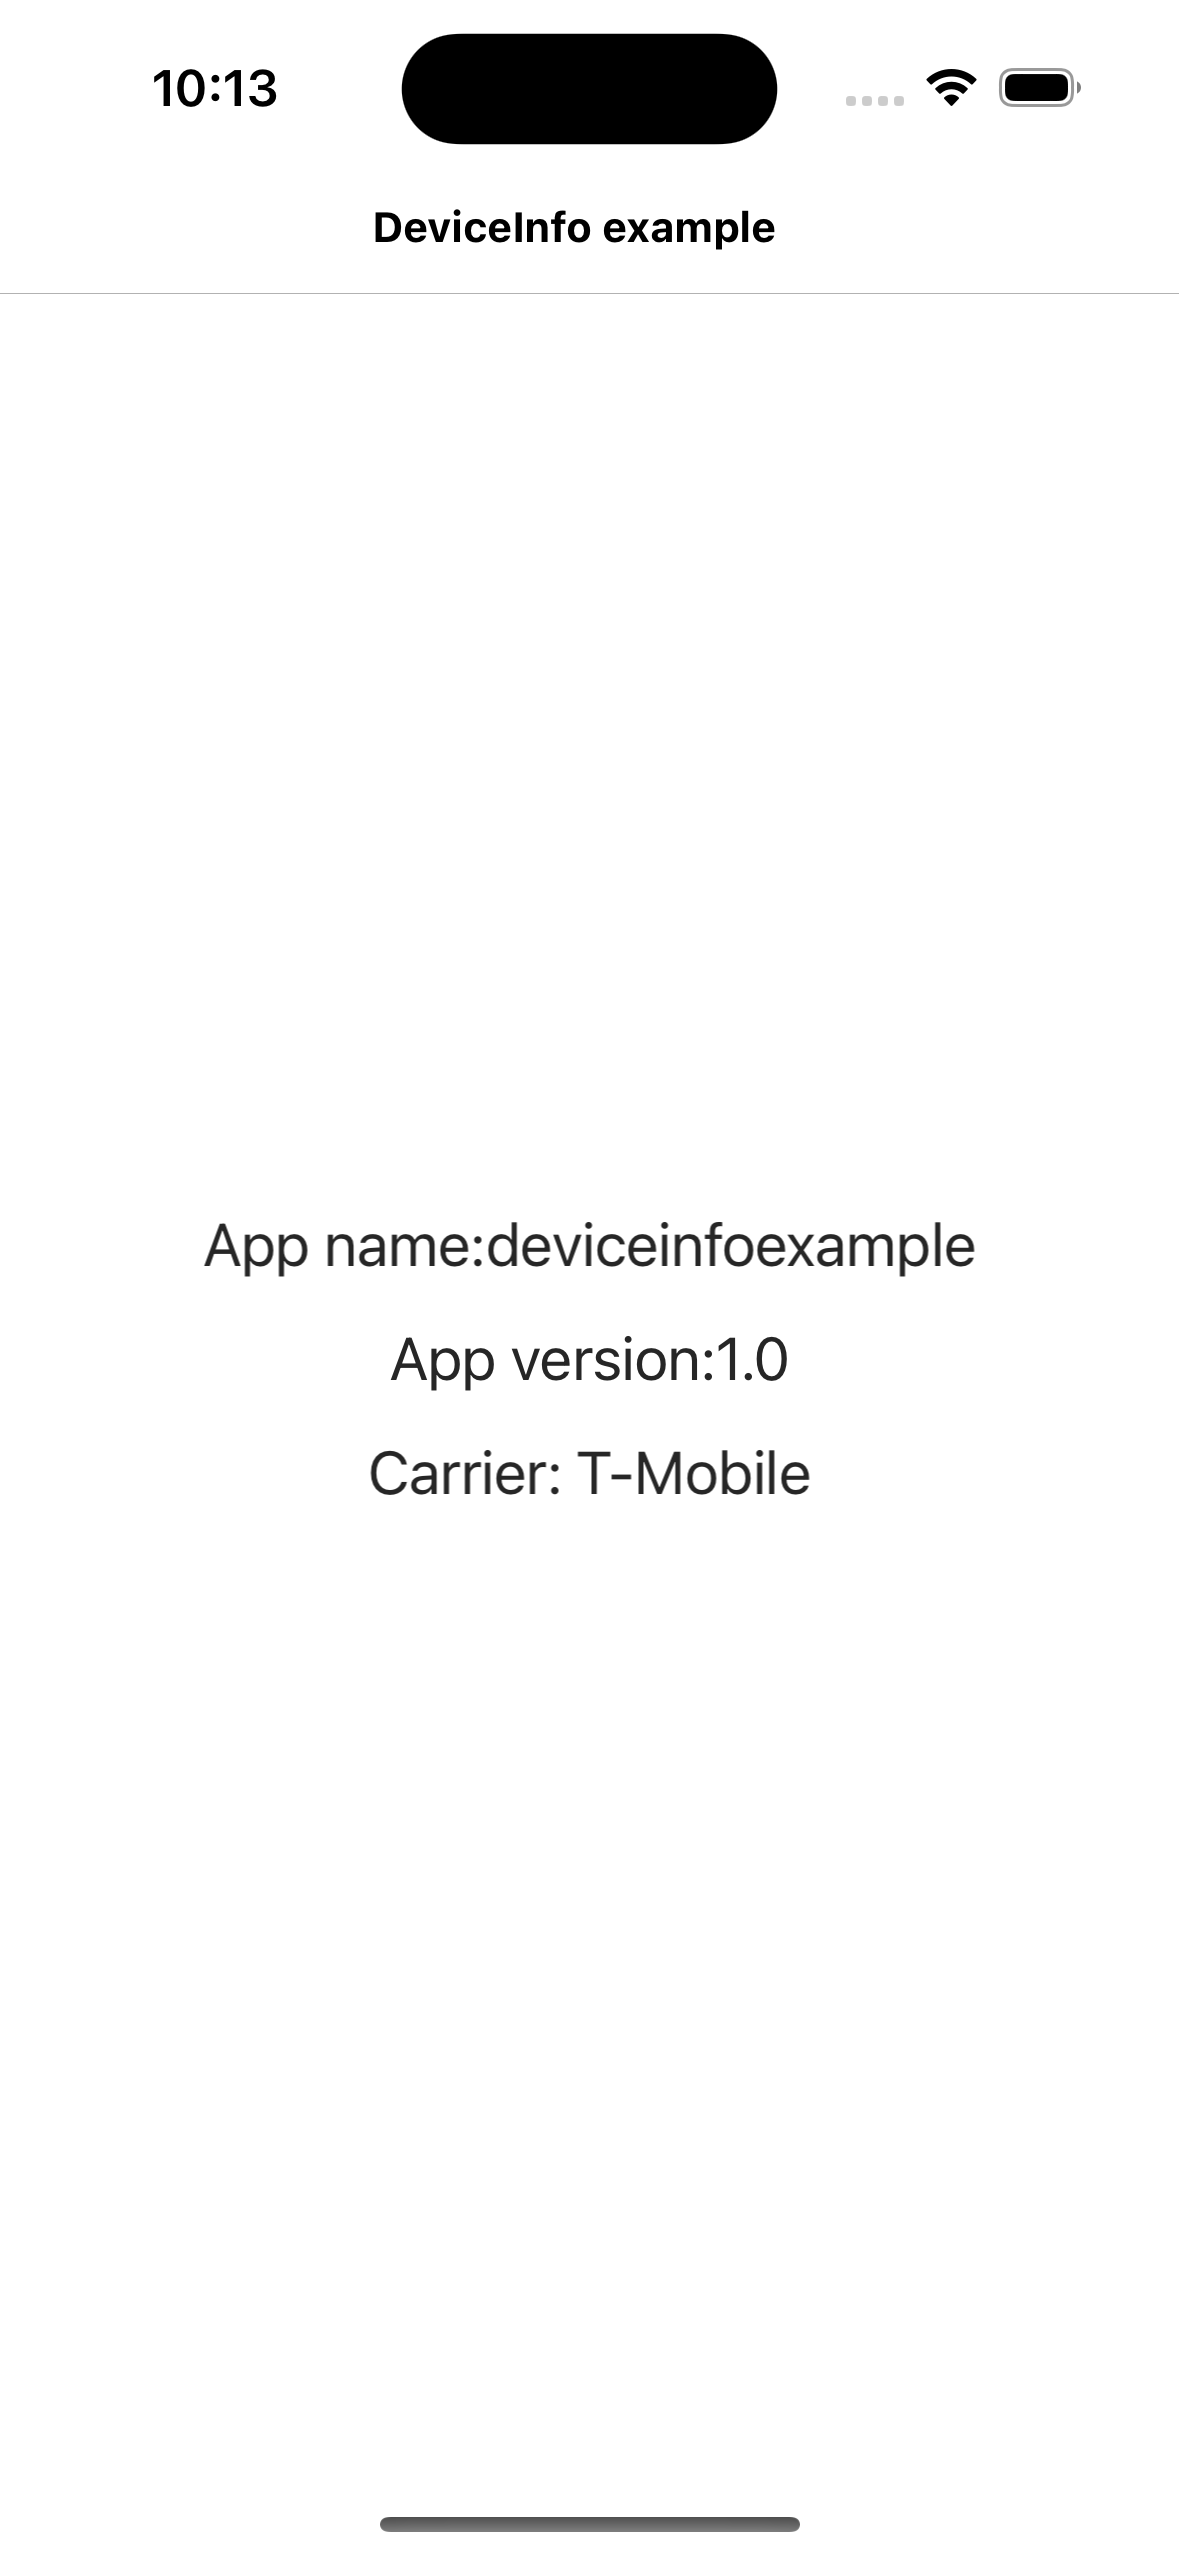 Deviceinfo example iOS